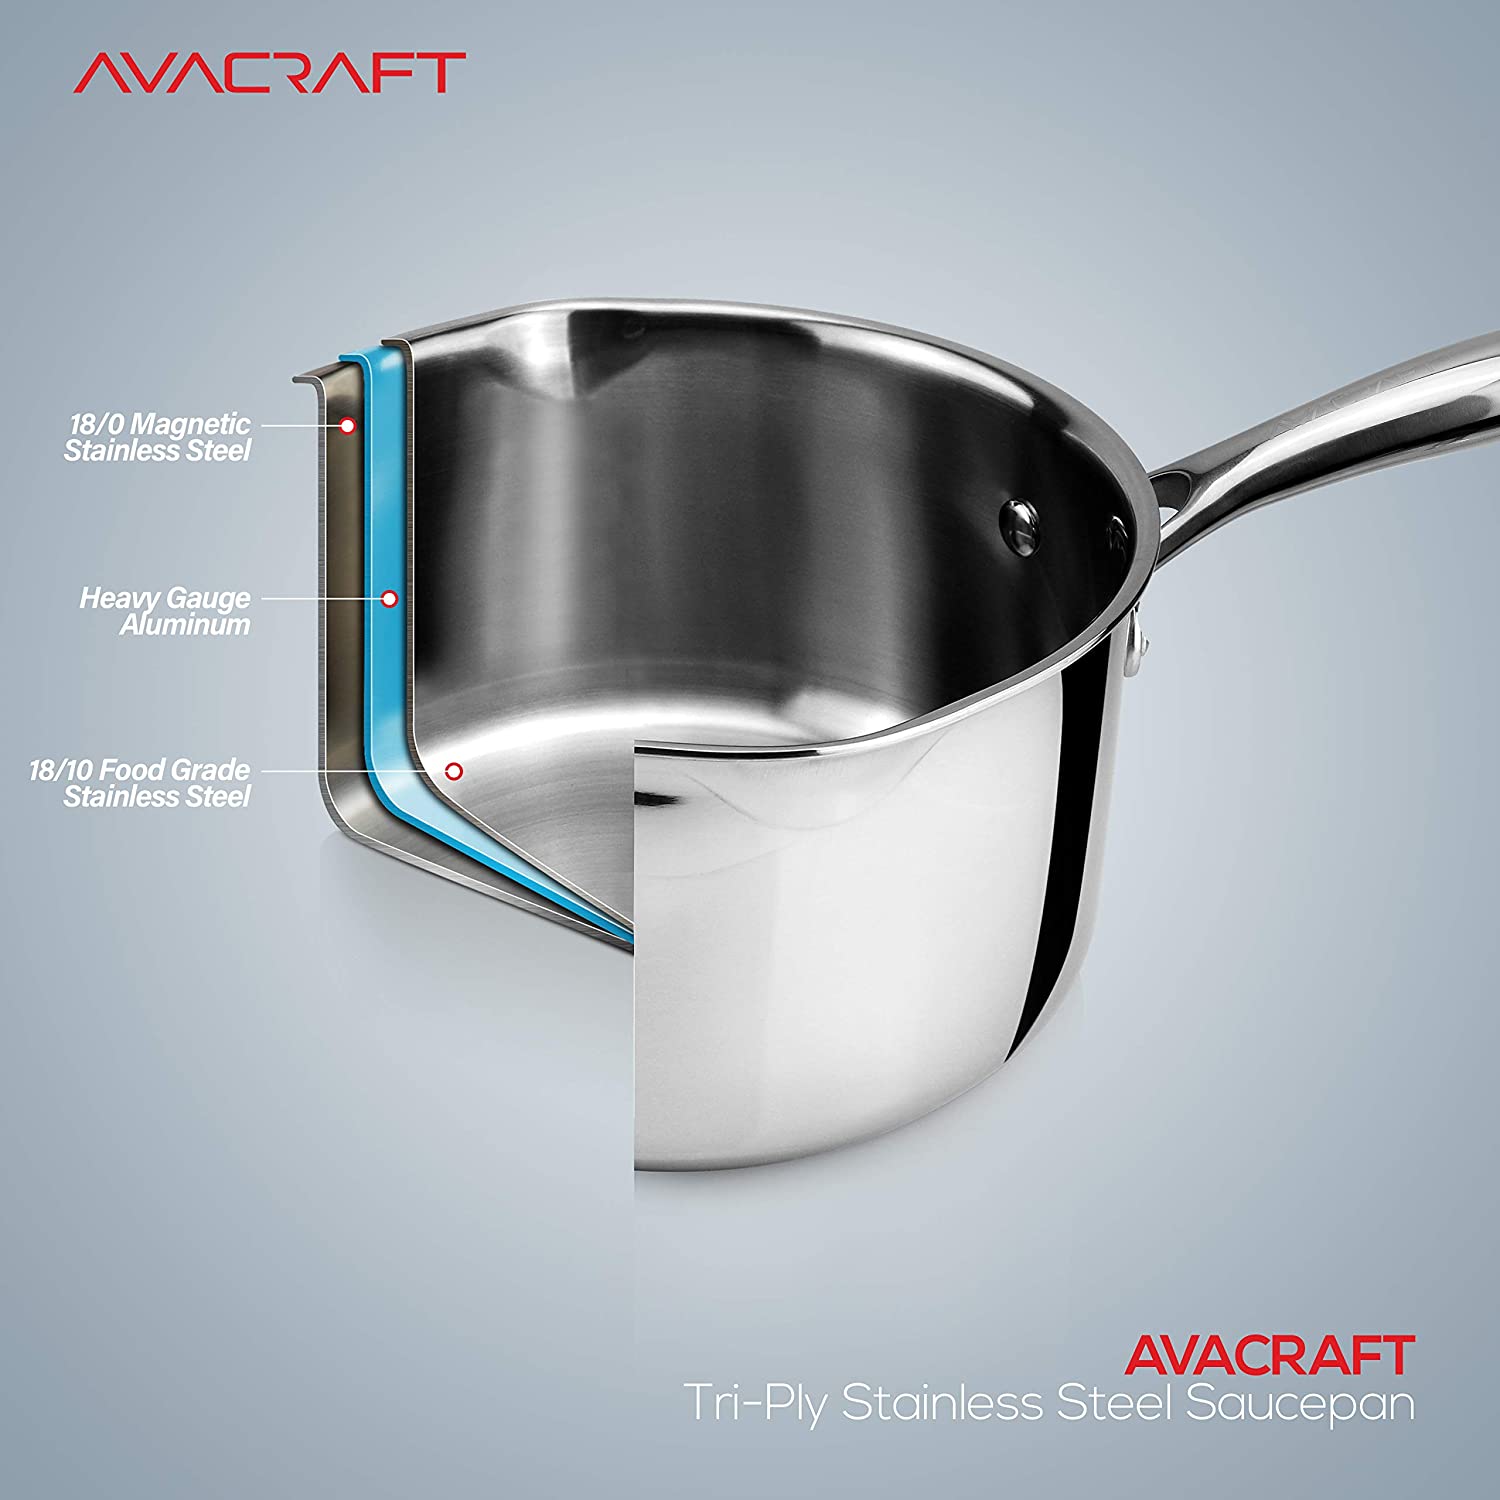 AVACRAFT 18/10 Tri-Ply Stainless Steel Multipurpose Pot, Dutch Oven Casserole Stock Pot with Lid, Ergonomic Heat Proof Handles